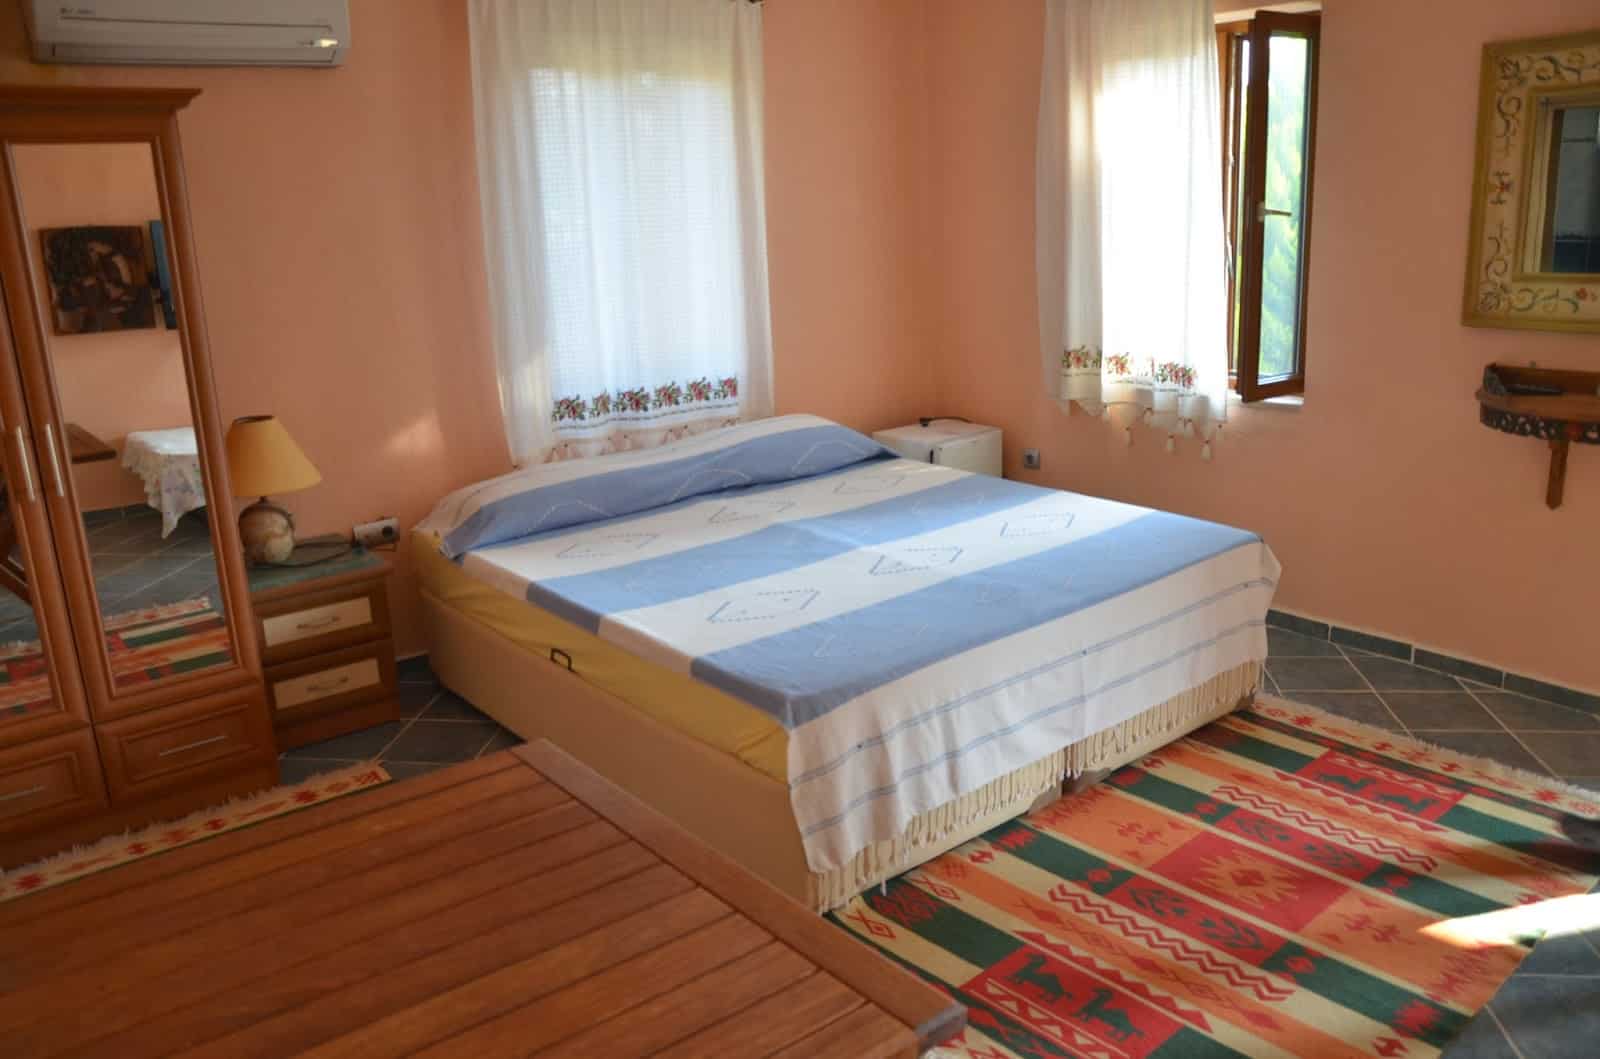 Bedroom in the house at Gülbahar Pansiyon at Ovabükü, Datça, Turkey